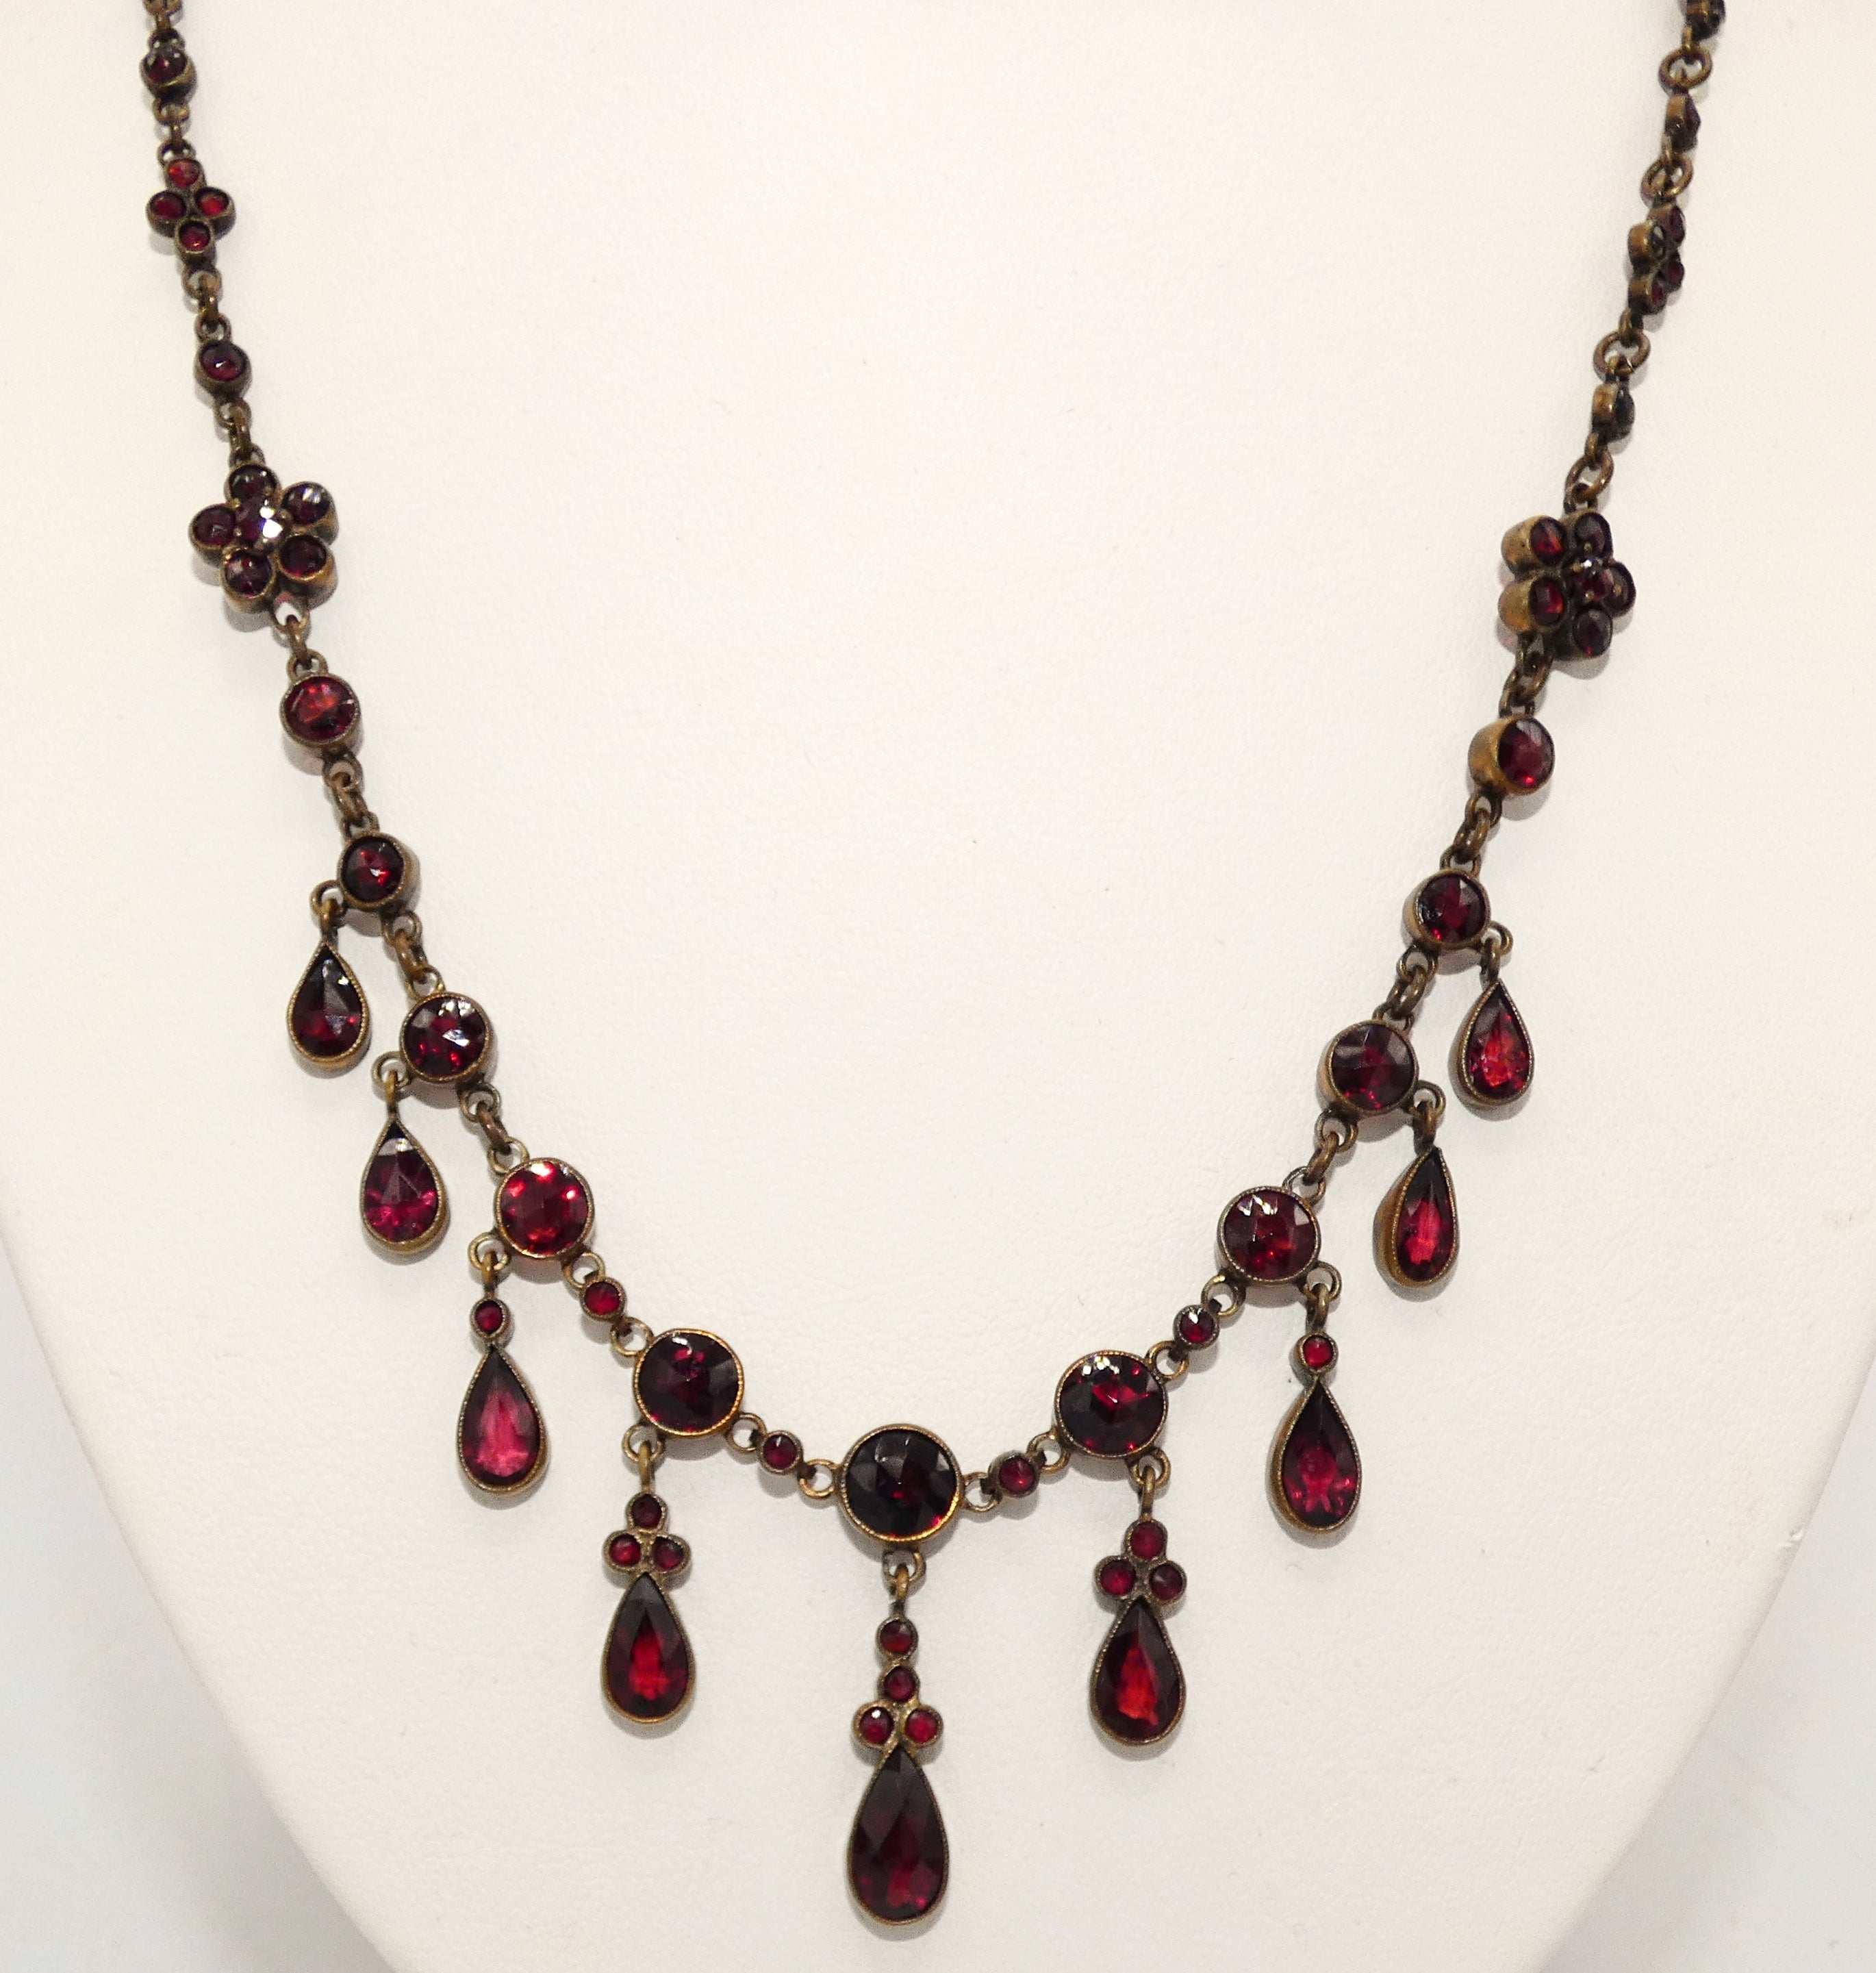 Buy Garnet Gemstone Necklace and Bracelet Online in India - Etsy